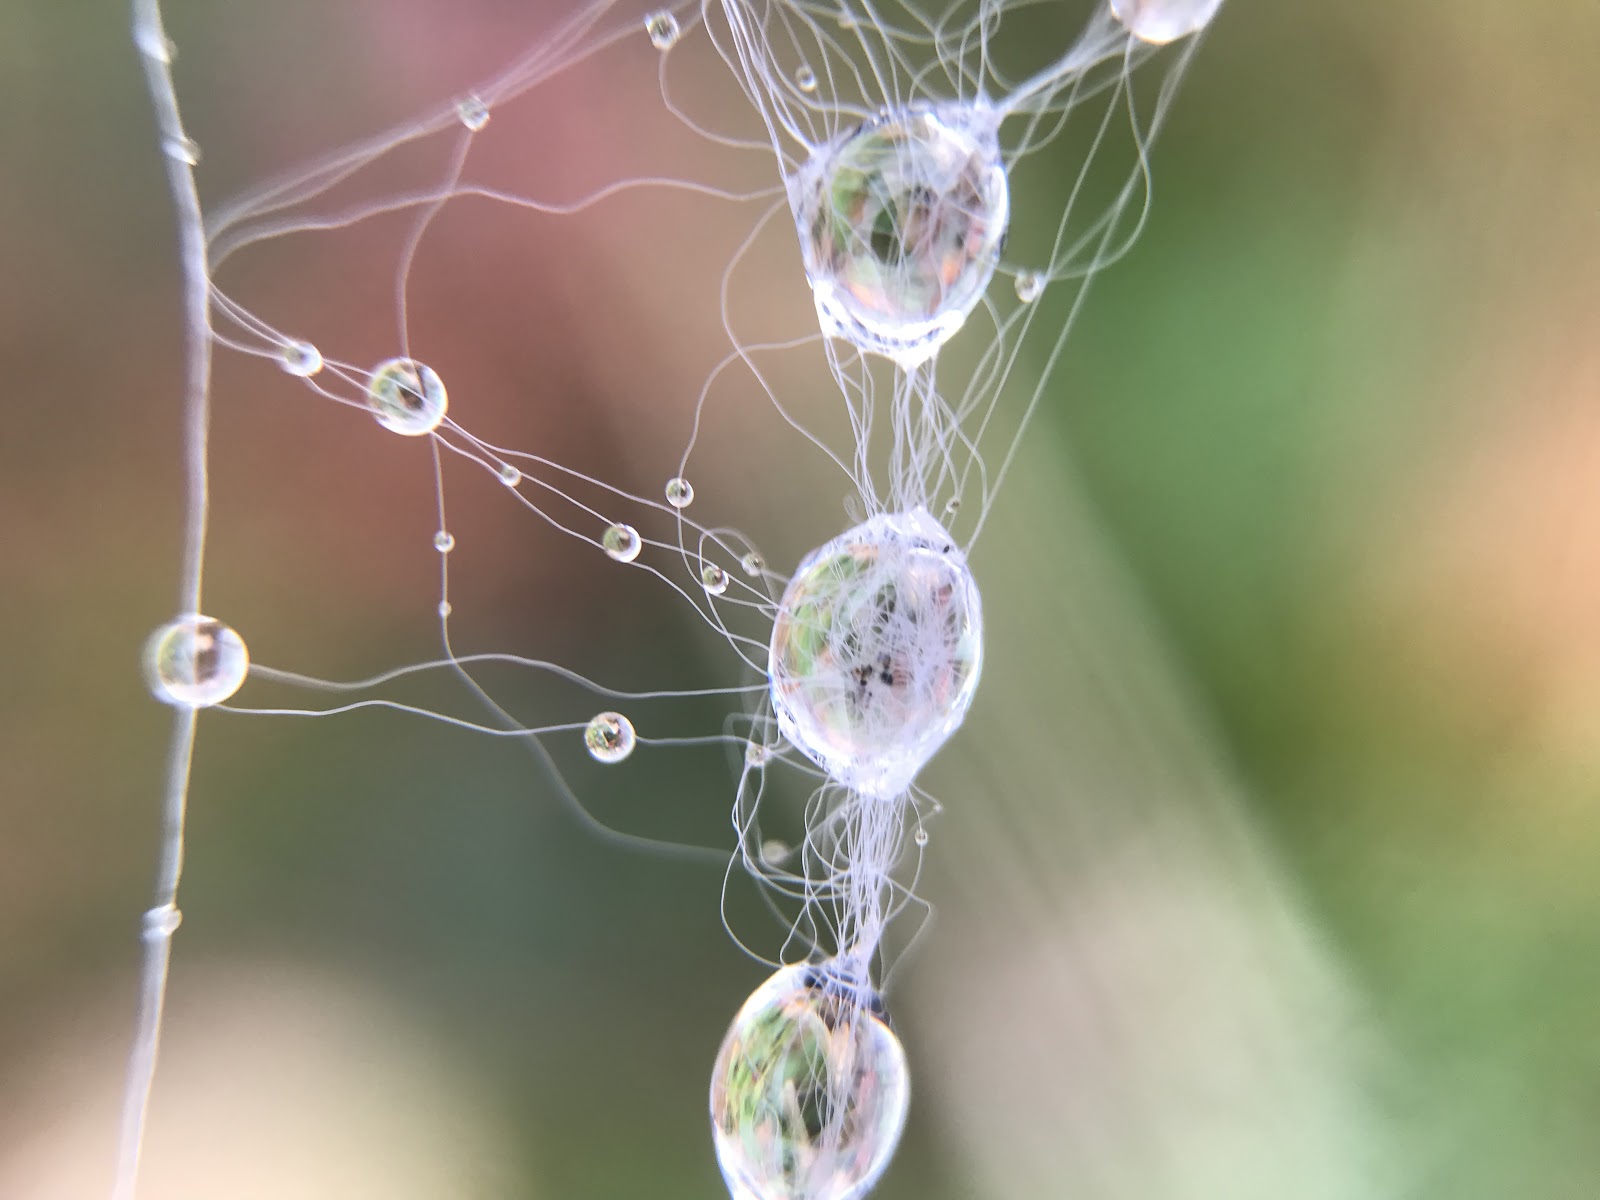 Image of dew on strands of web